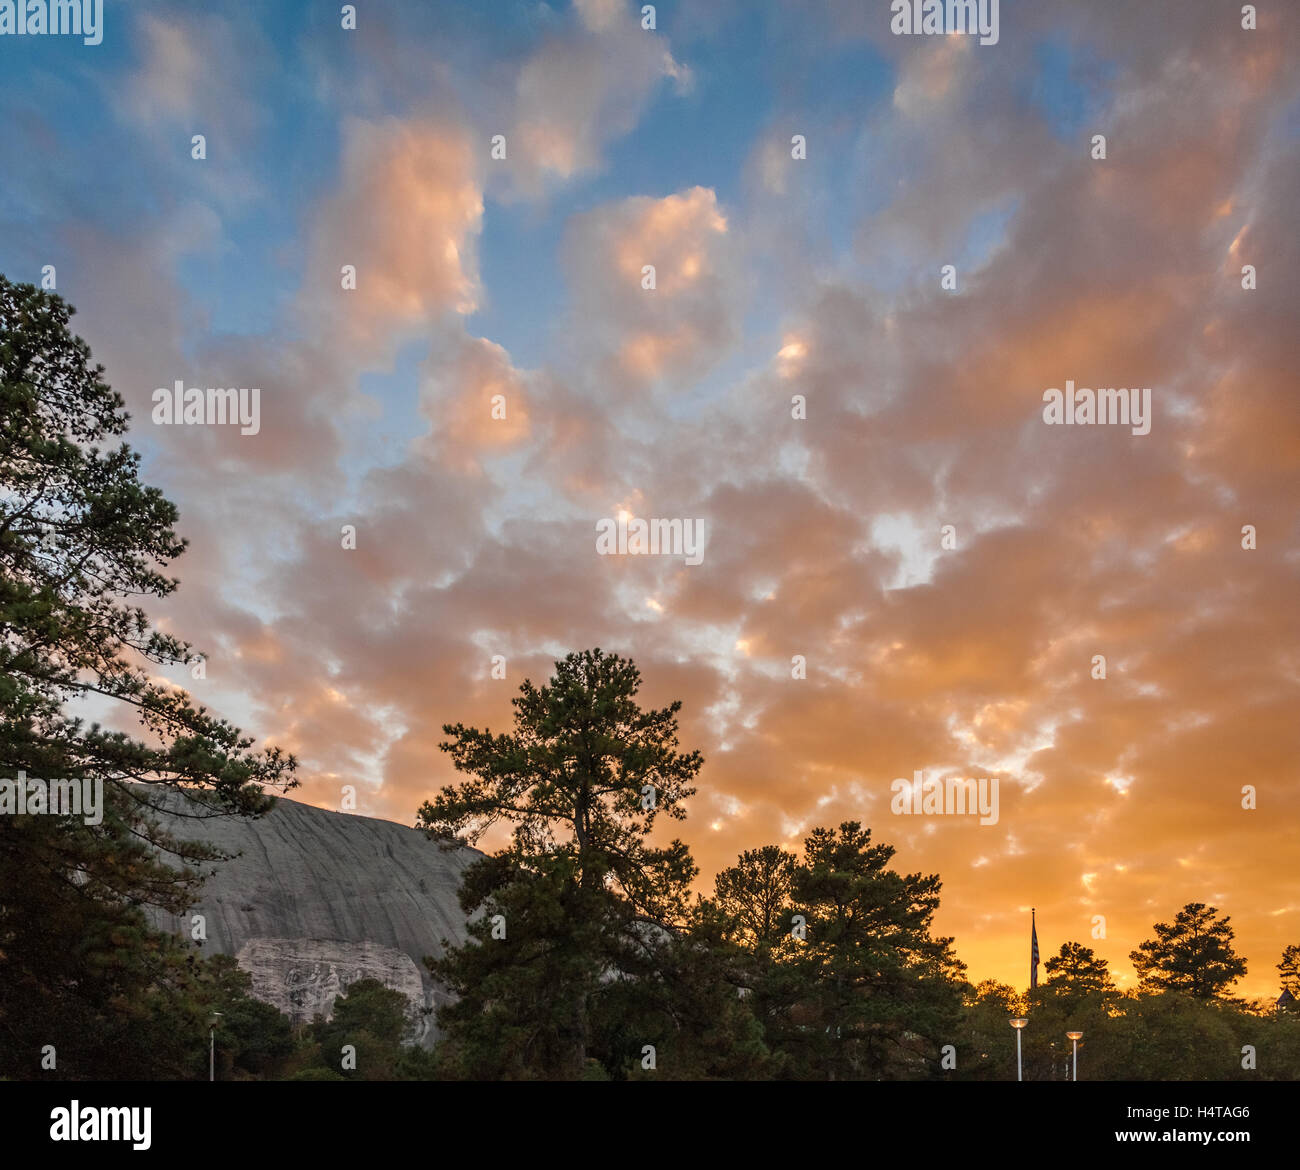 Fiery sunset over Stone Mountain Park in Atlanta, Georgia, USA. Stock Photo